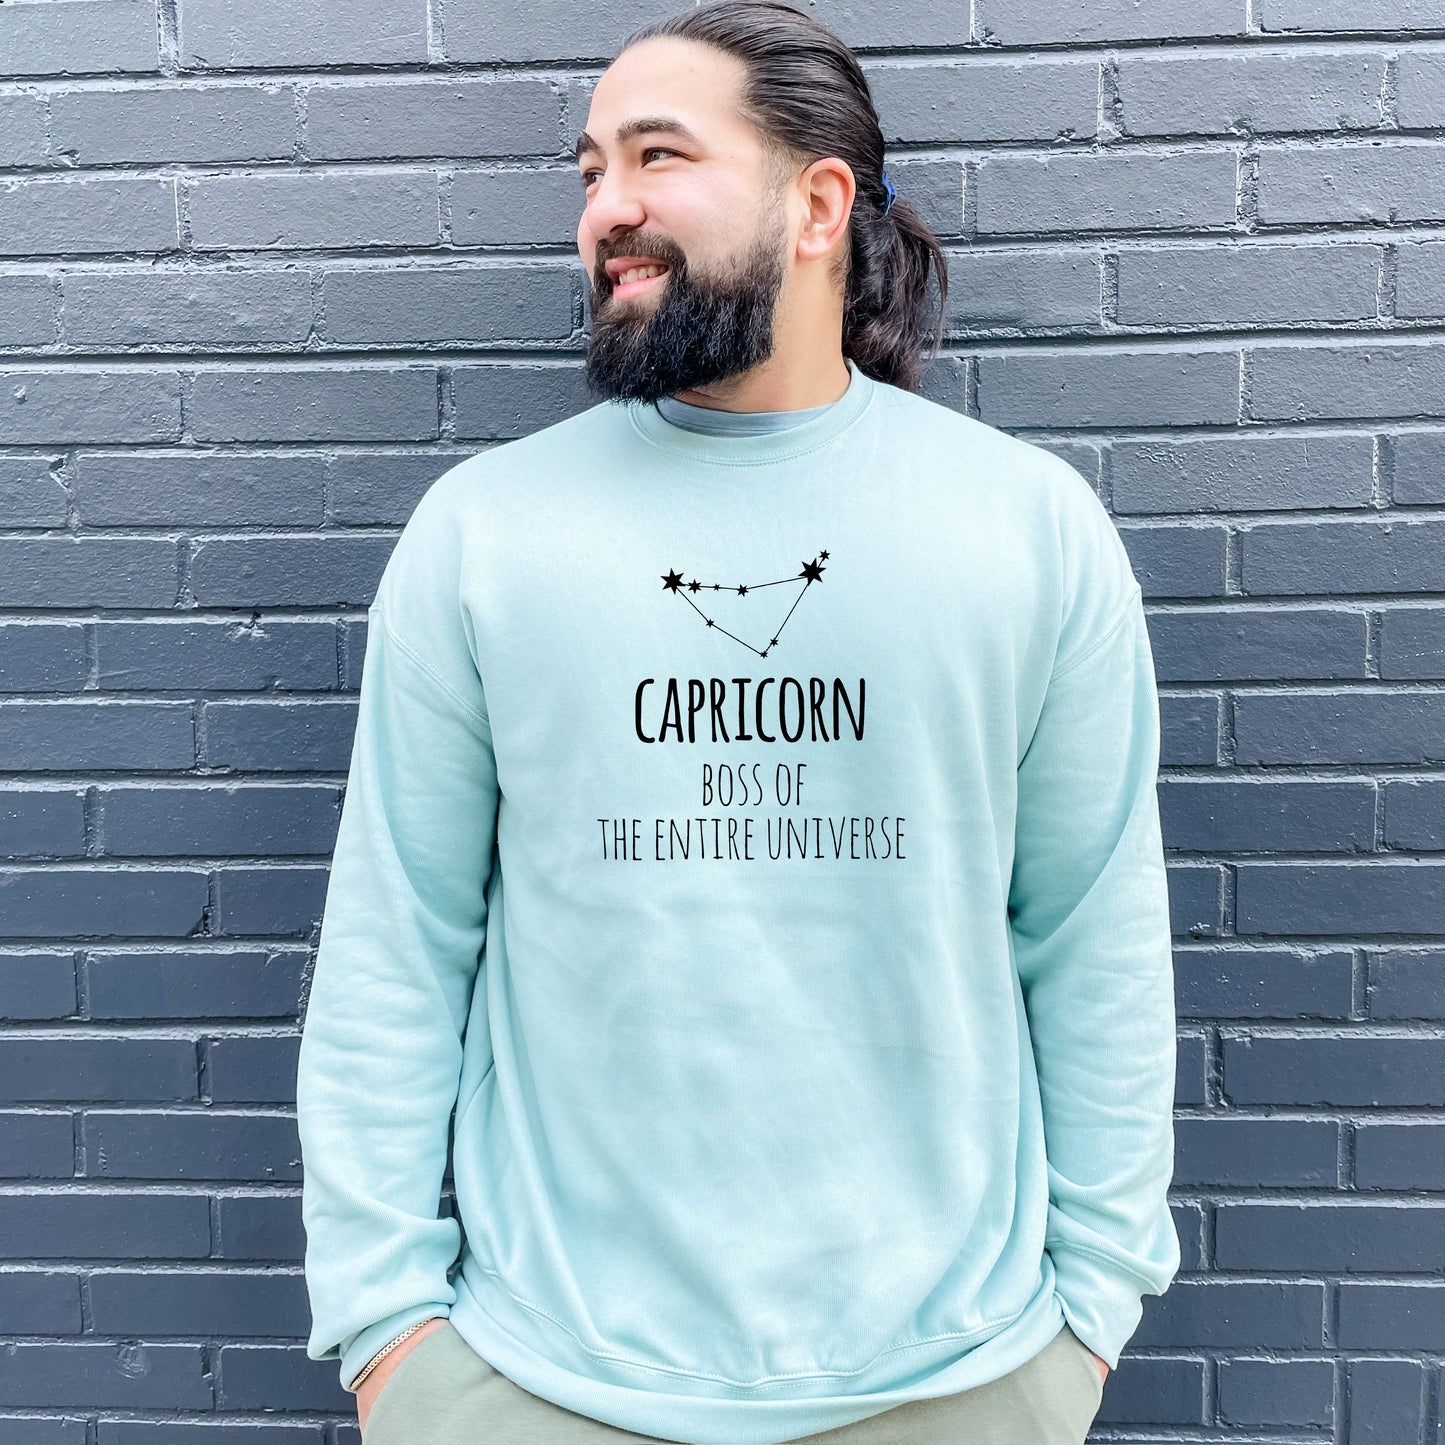 Capricorn - Unisex Sweatshirt - Heather Gray or Dusty Blue